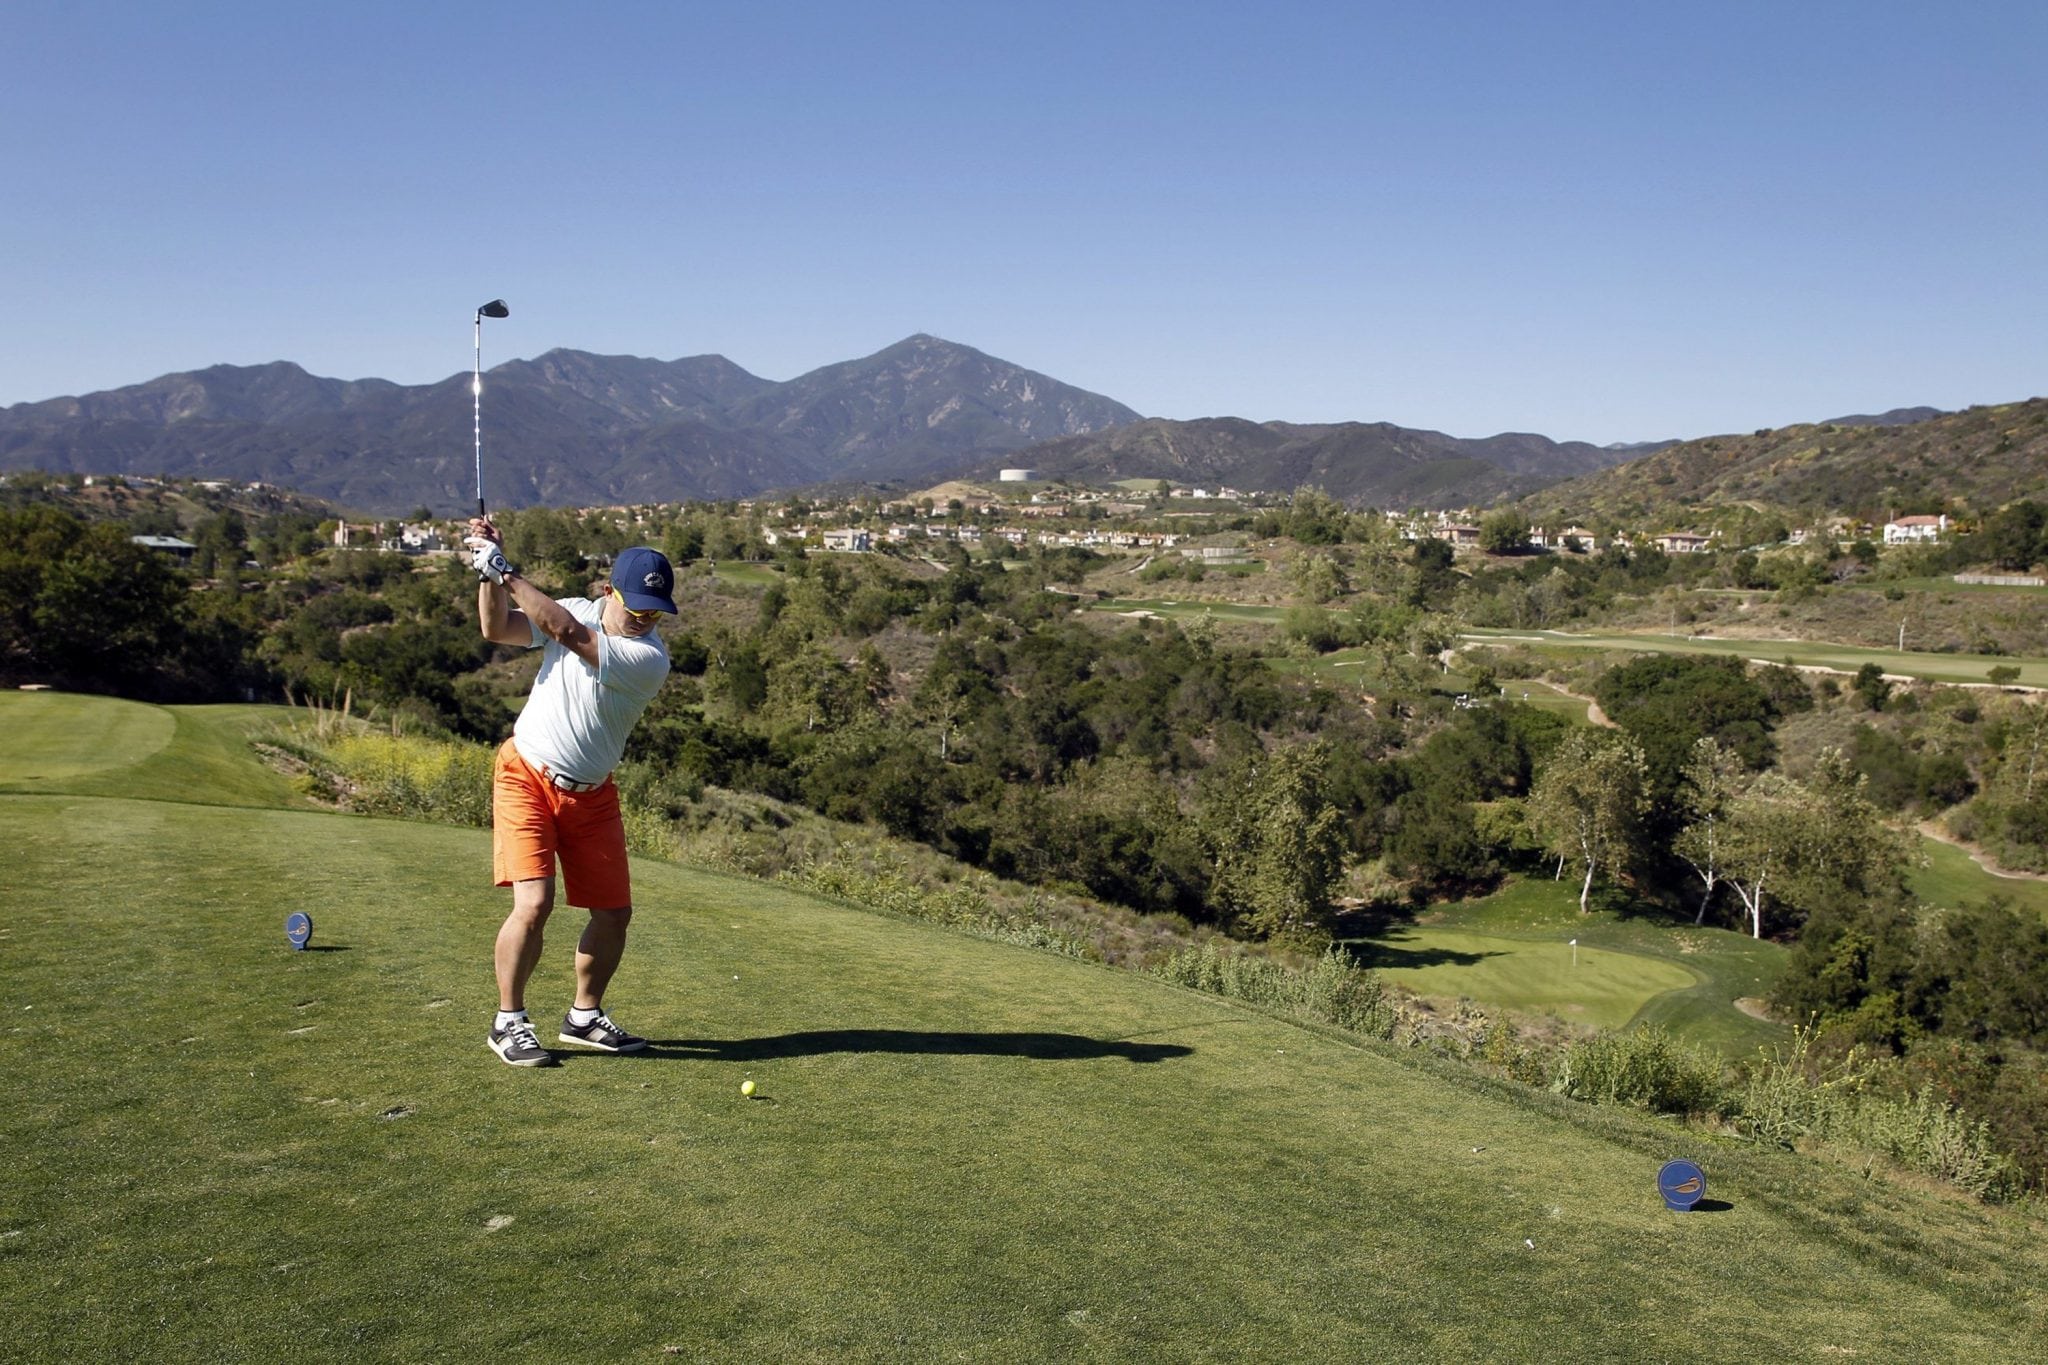 Chang Jian Zhang from Hangzhou, China, plays a round at Dove Canyon Golf Club in Dove Canyon, California.